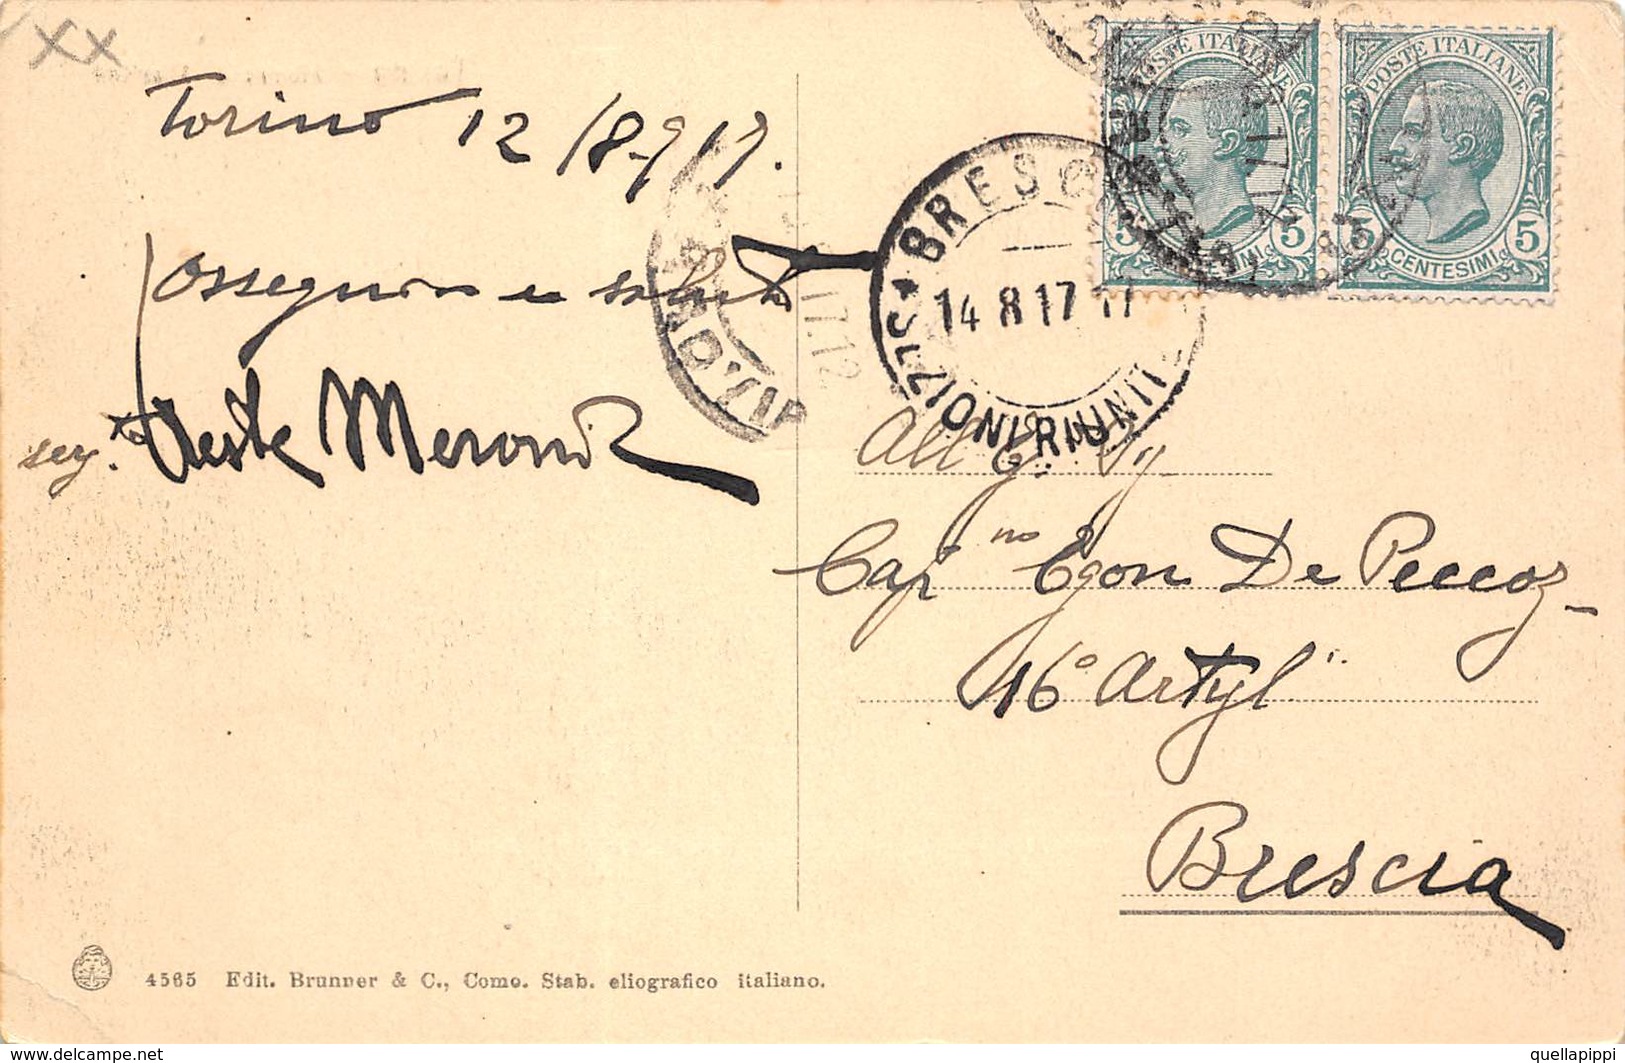 010237 "TORINO - PIAZZA S. MARTINO" ANIMATA, TRAMWAY.  CART SPED 1917 - Places & Squares